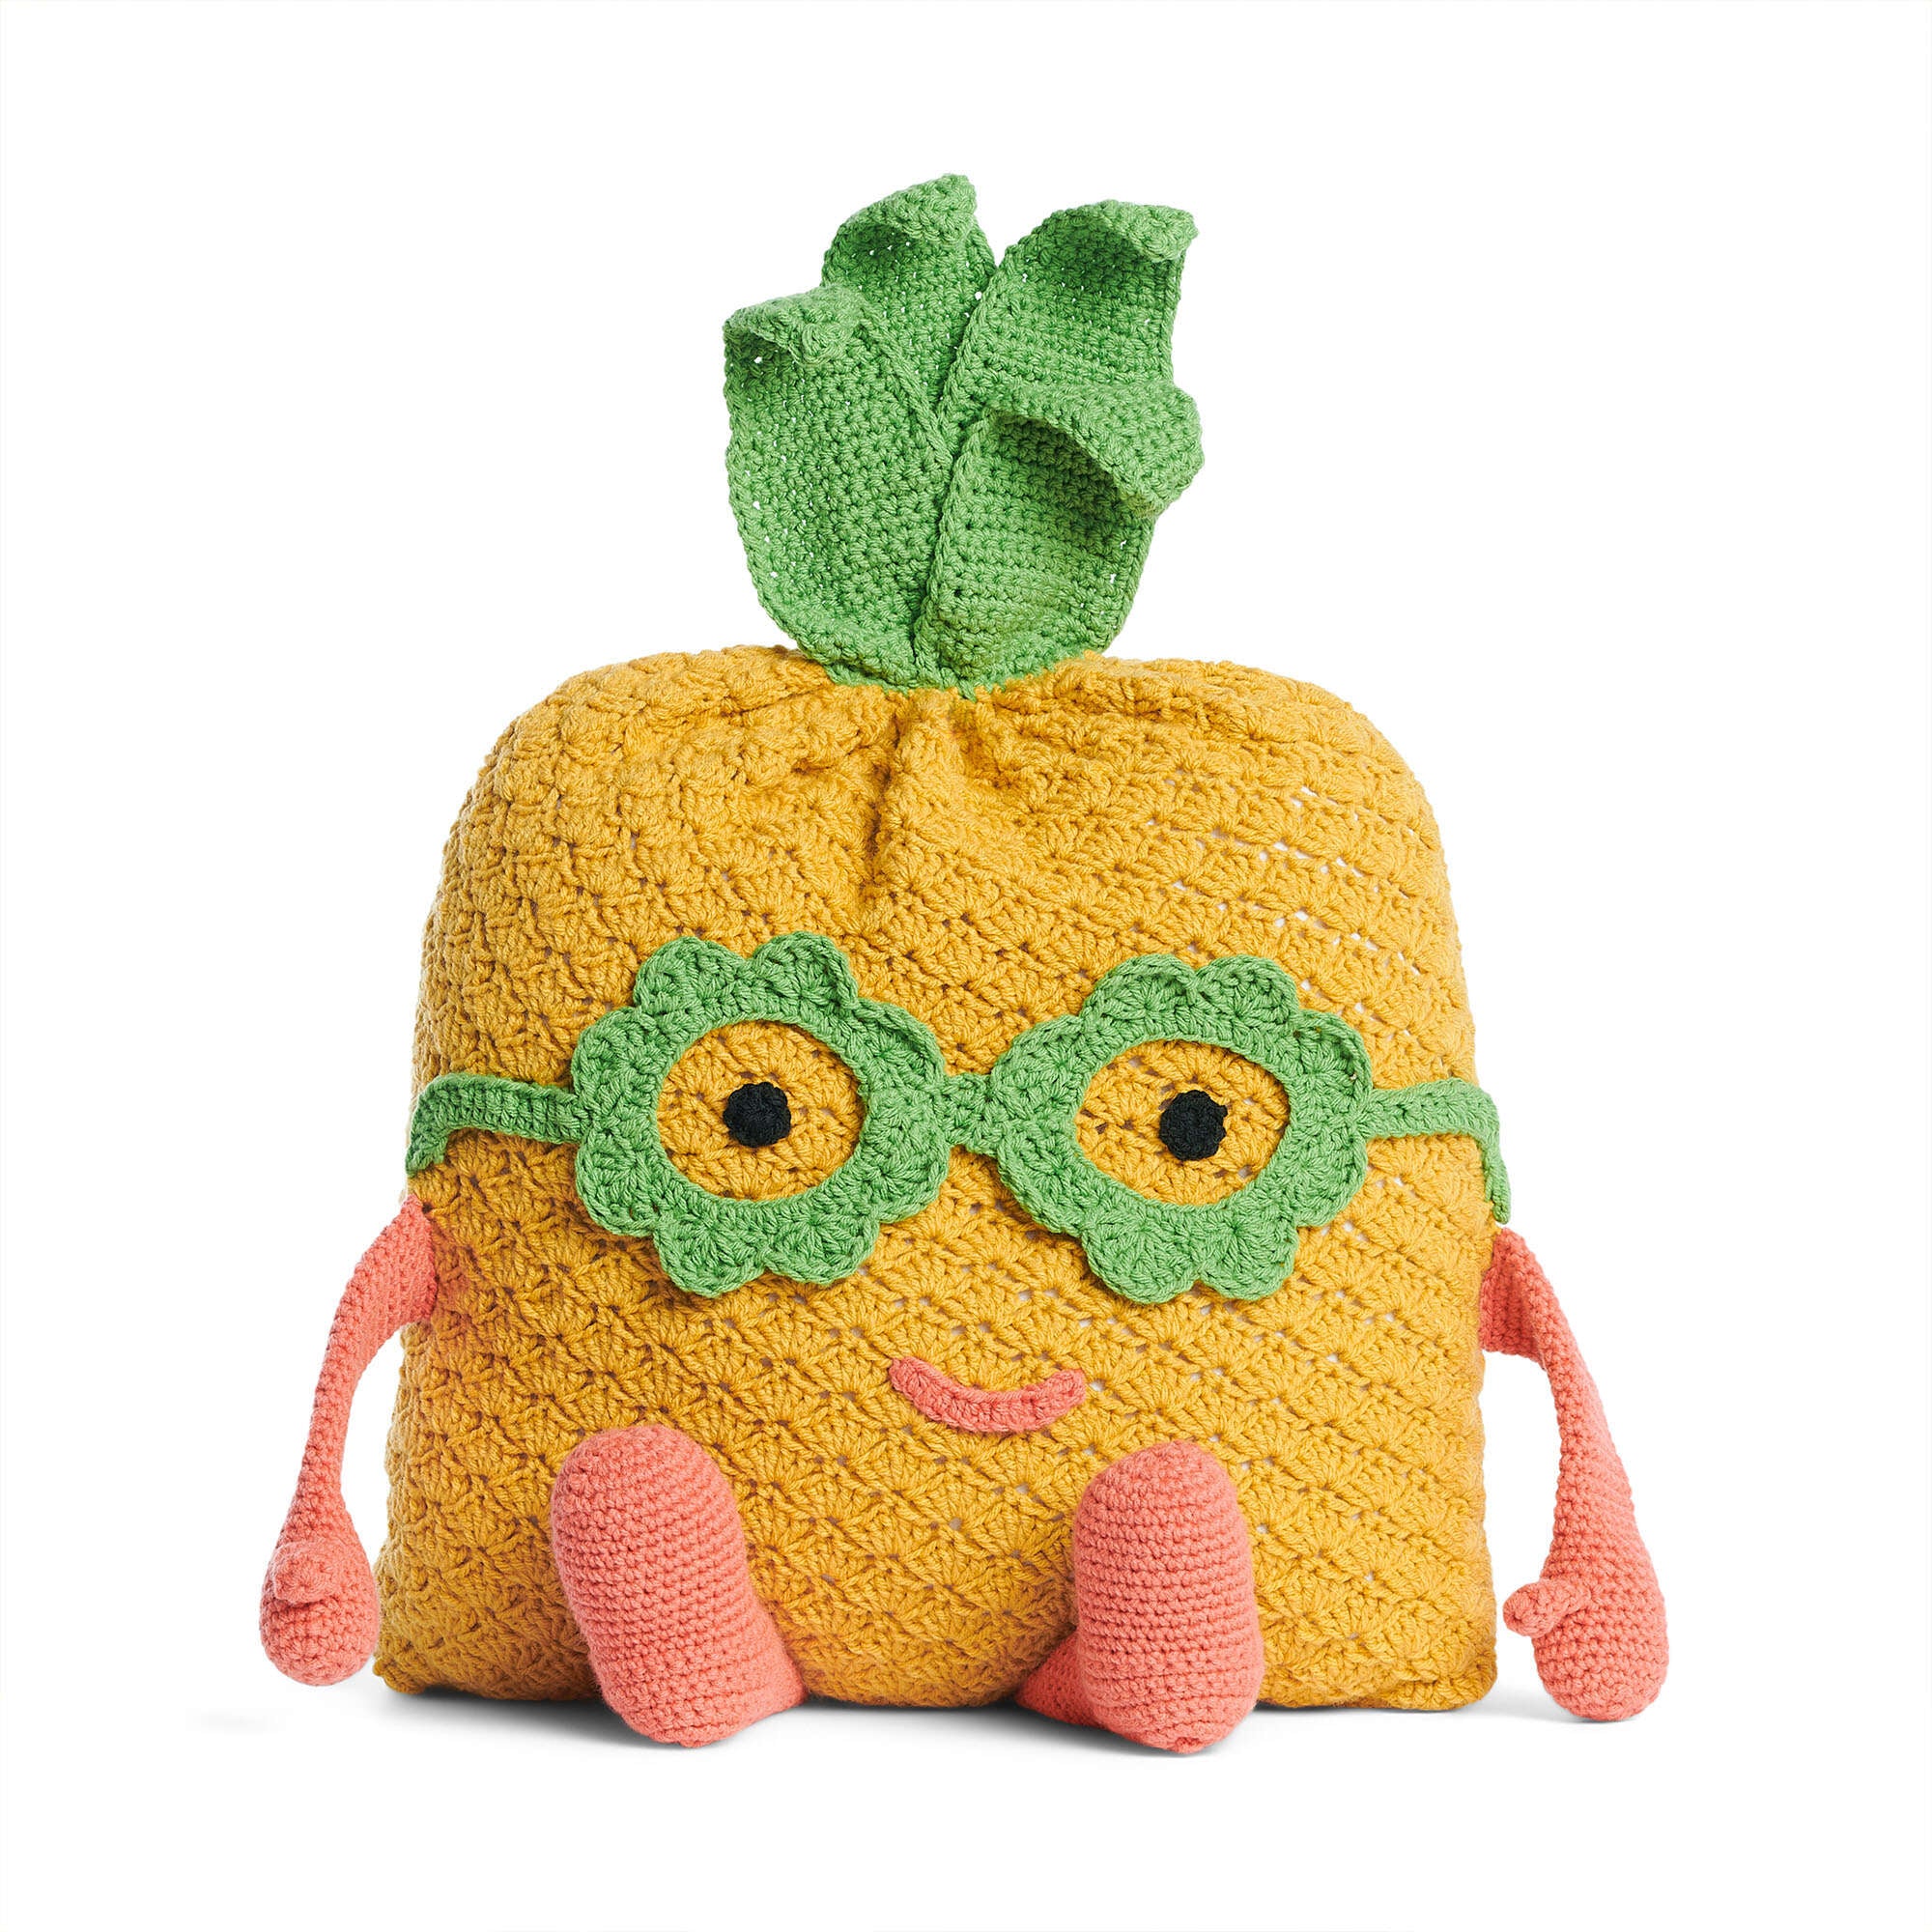 Caron Pineapple Crochet Study Buddy | Yarnspirations